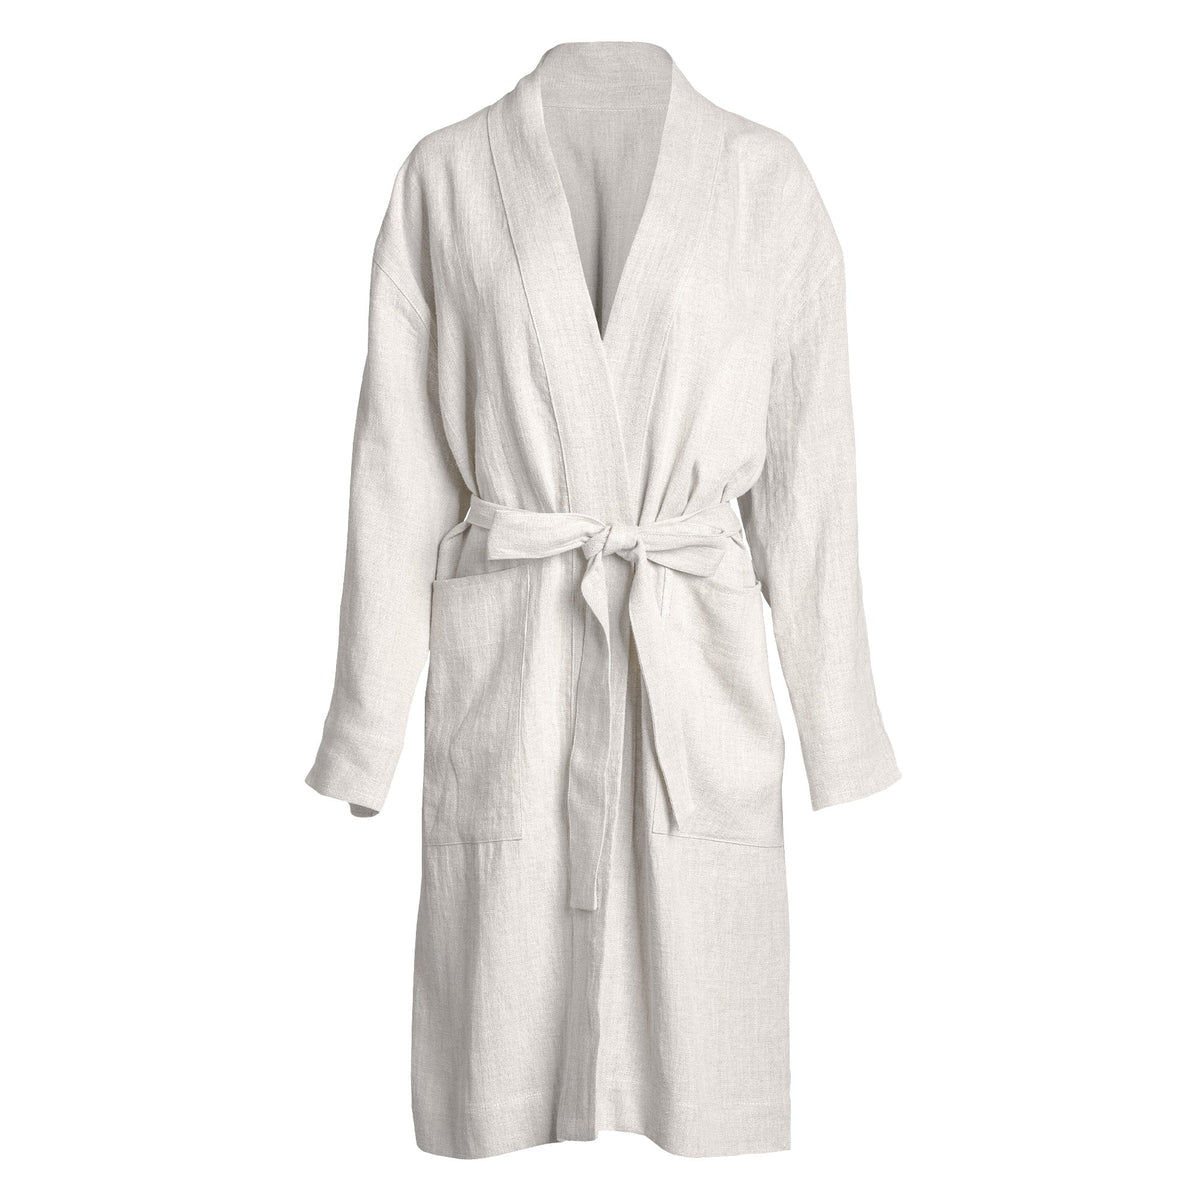 MENIQUE 100% Linen Bath Robe